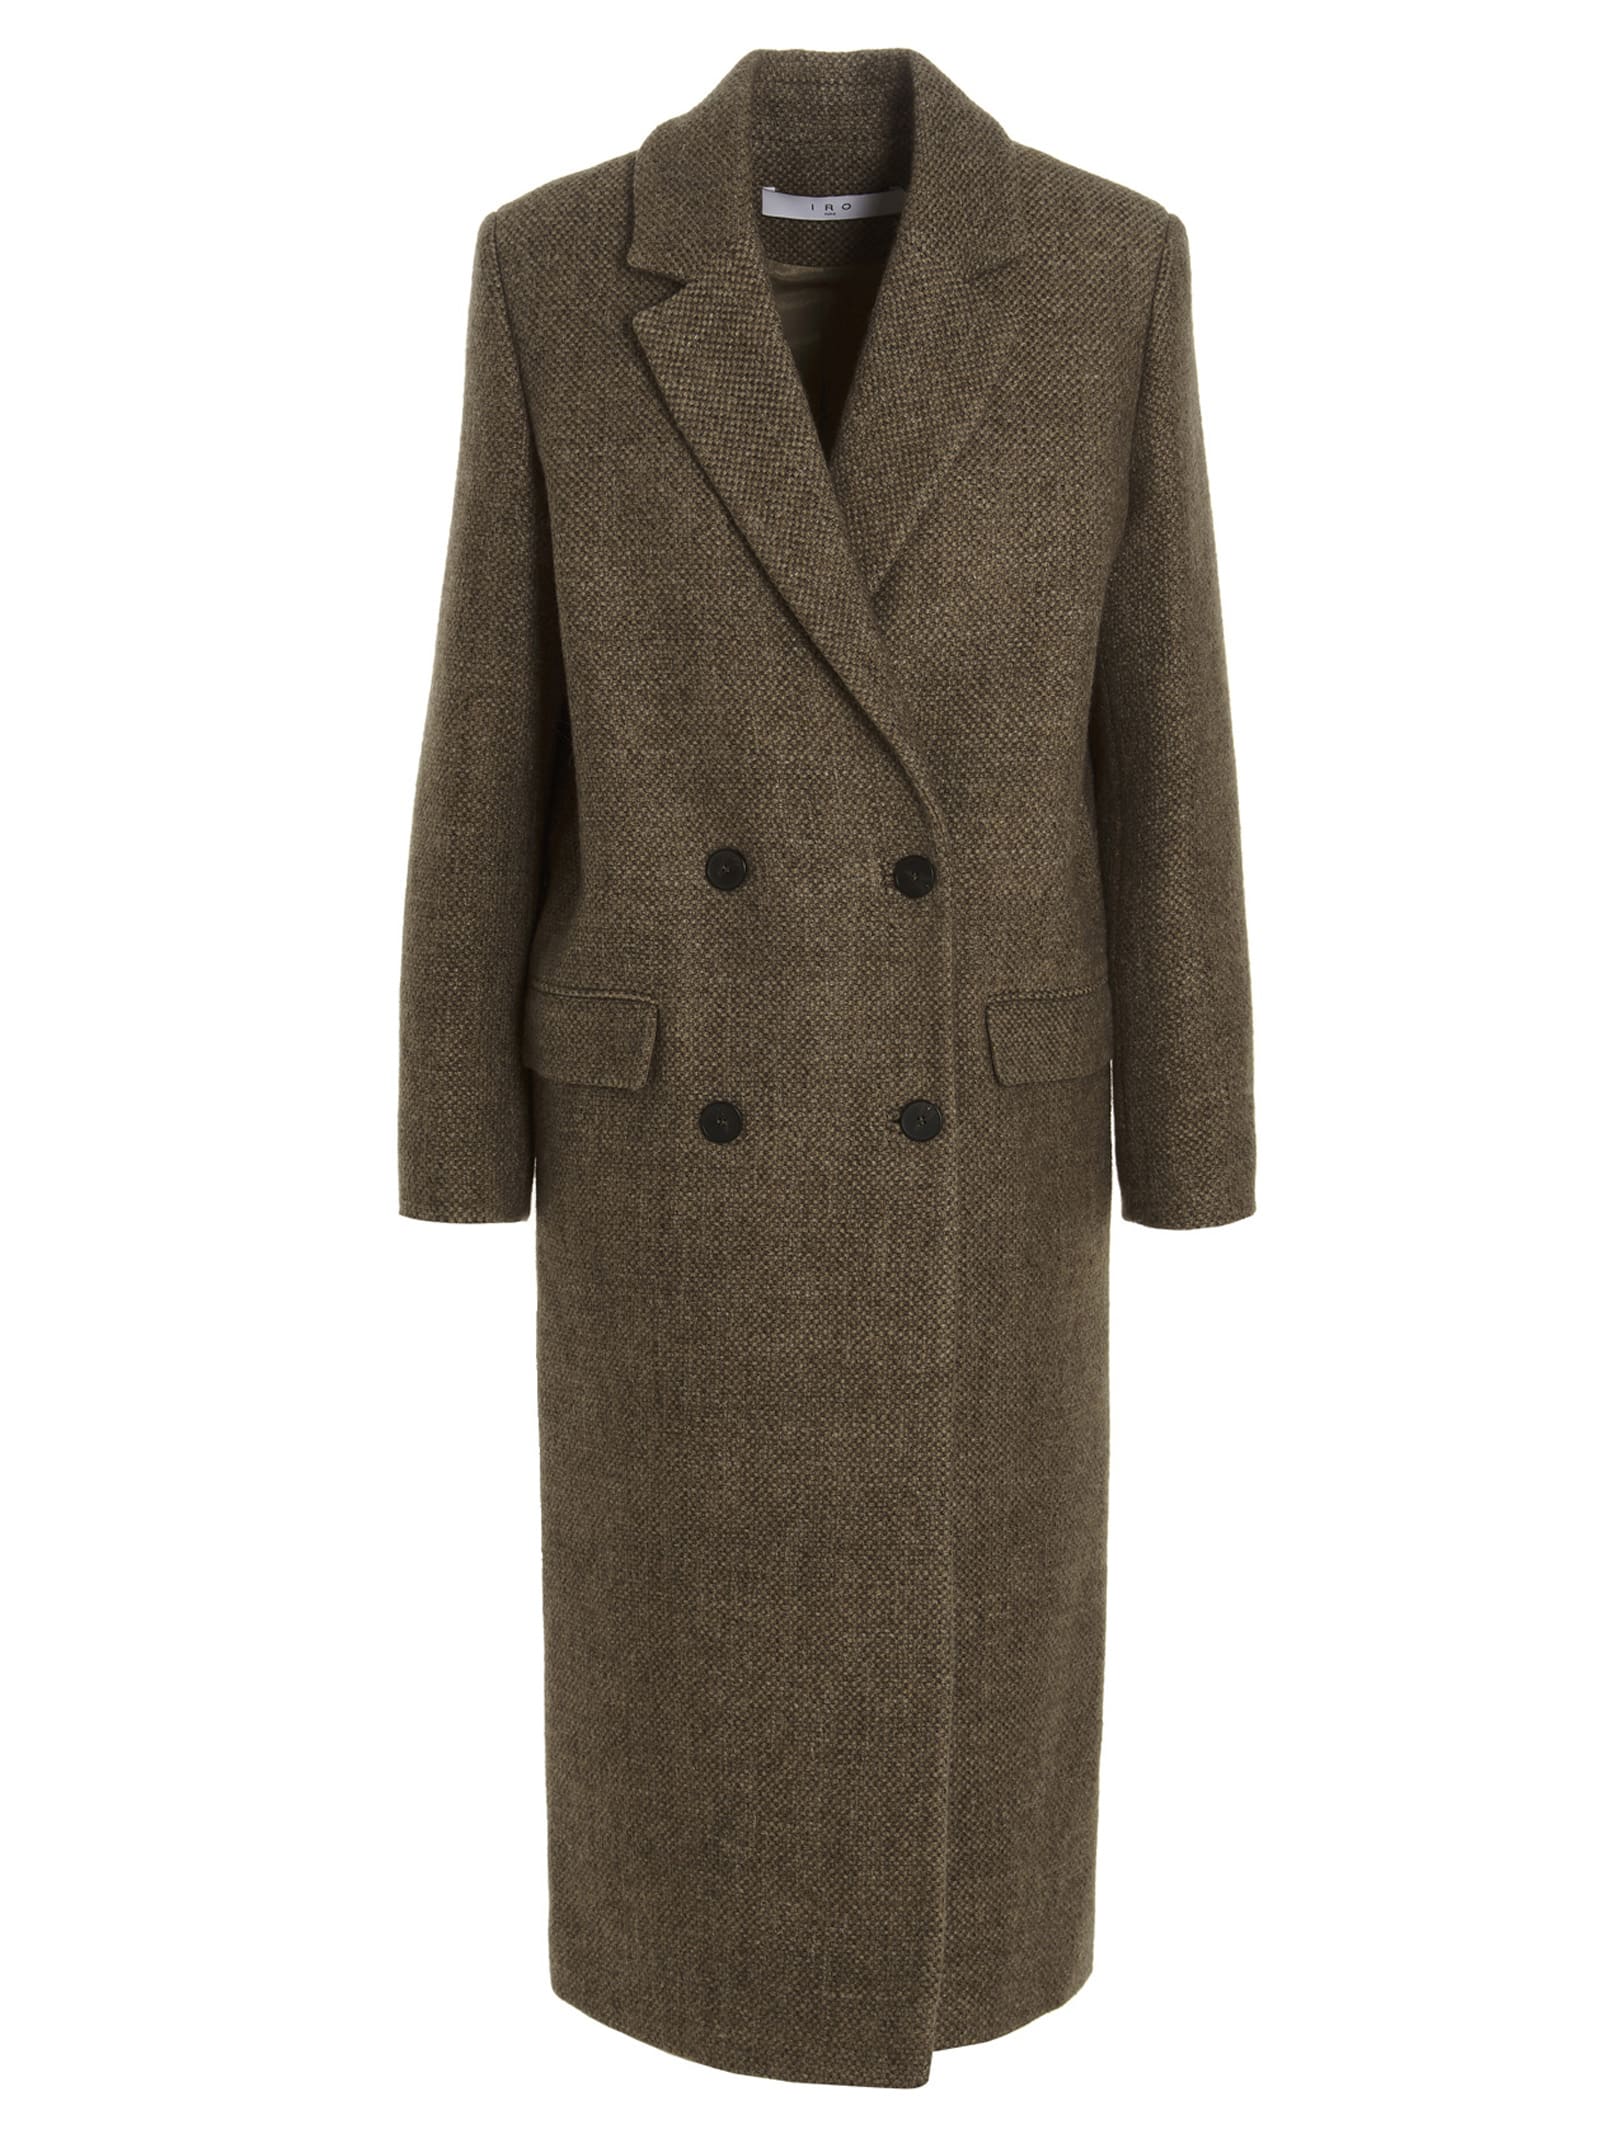 Wool Blend Women’s Coat Size 38 IRO Brannon Linen 